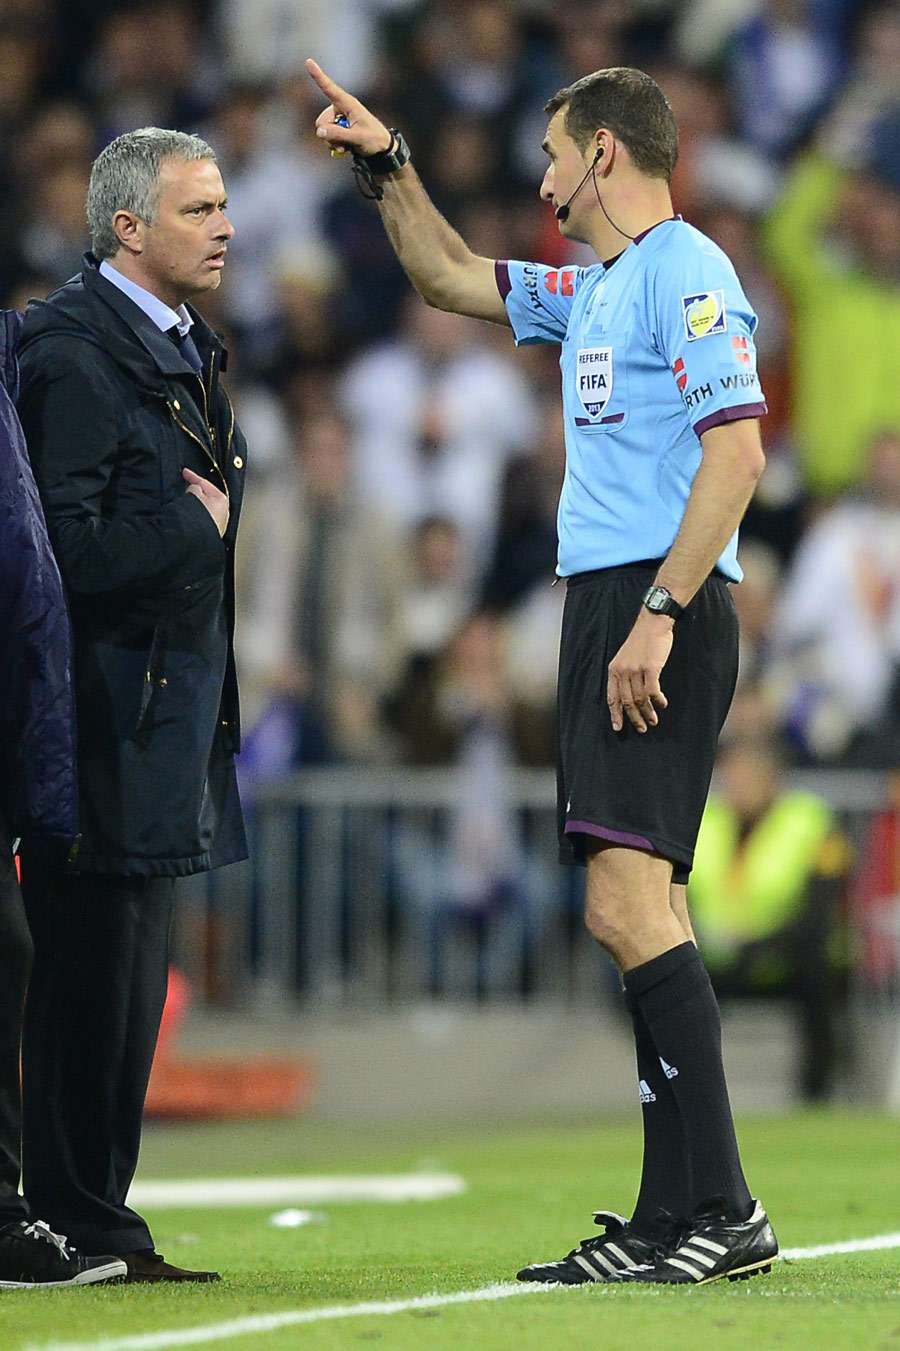 Jose Mourinho is sent off by referee Carlos Clos Gomez 